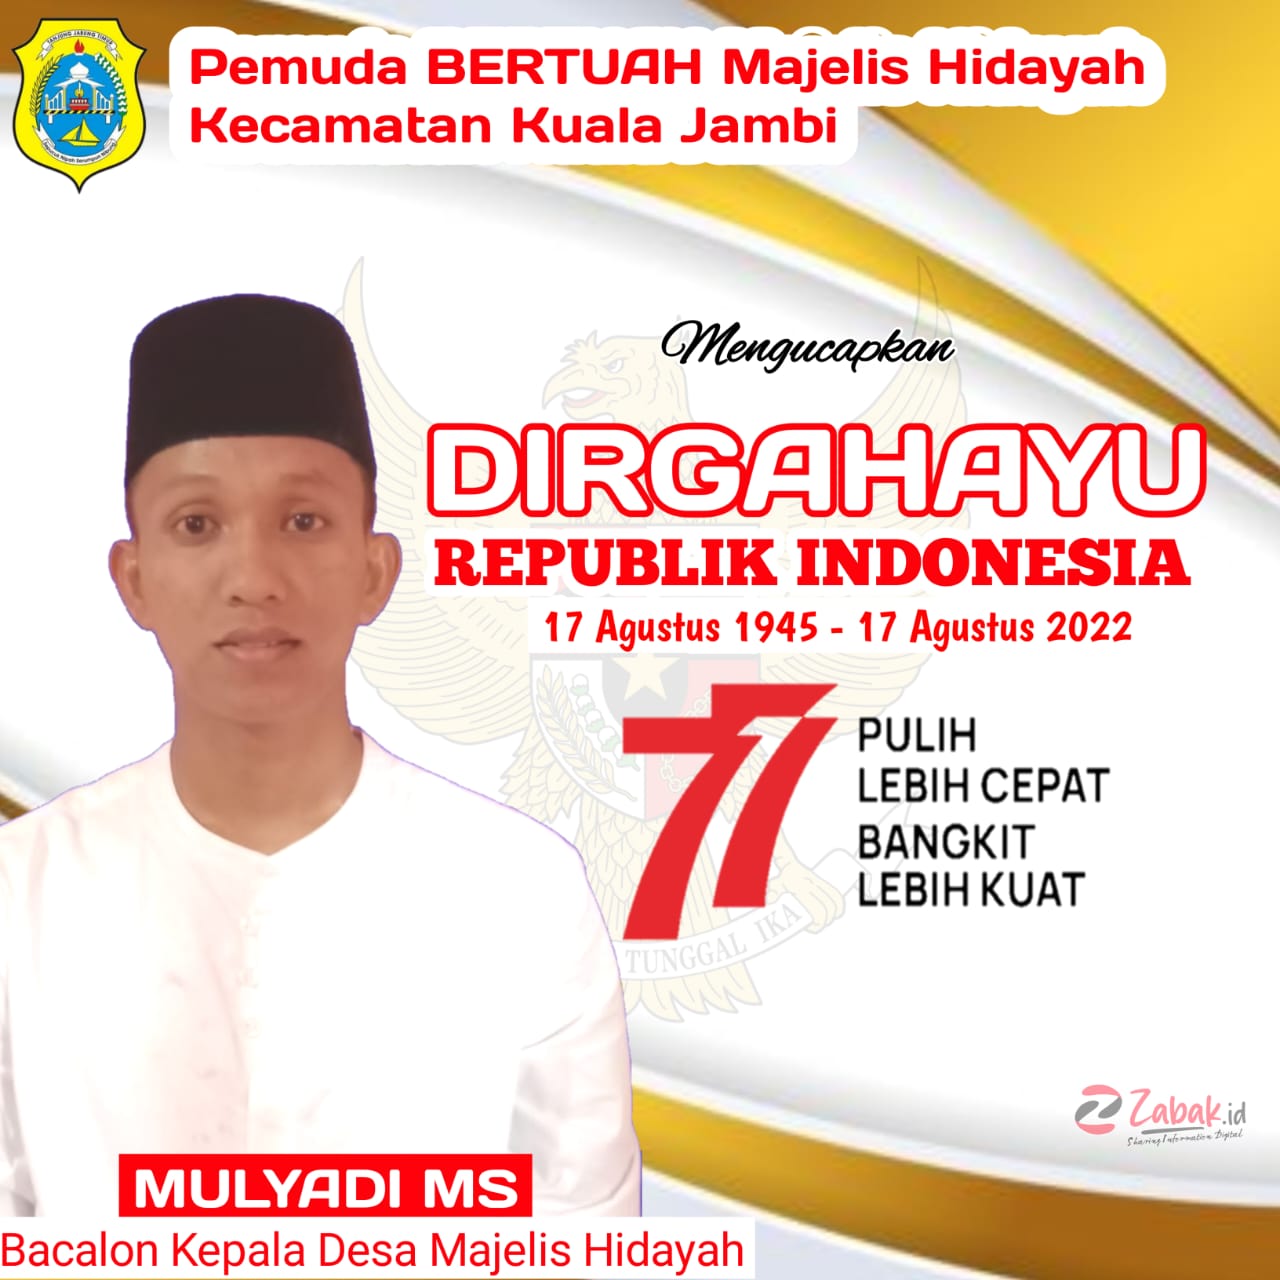 Pemuda BERTUAH Majelis Hidayah Ucapkan Dirgahayu Republik Indonesia ke 77